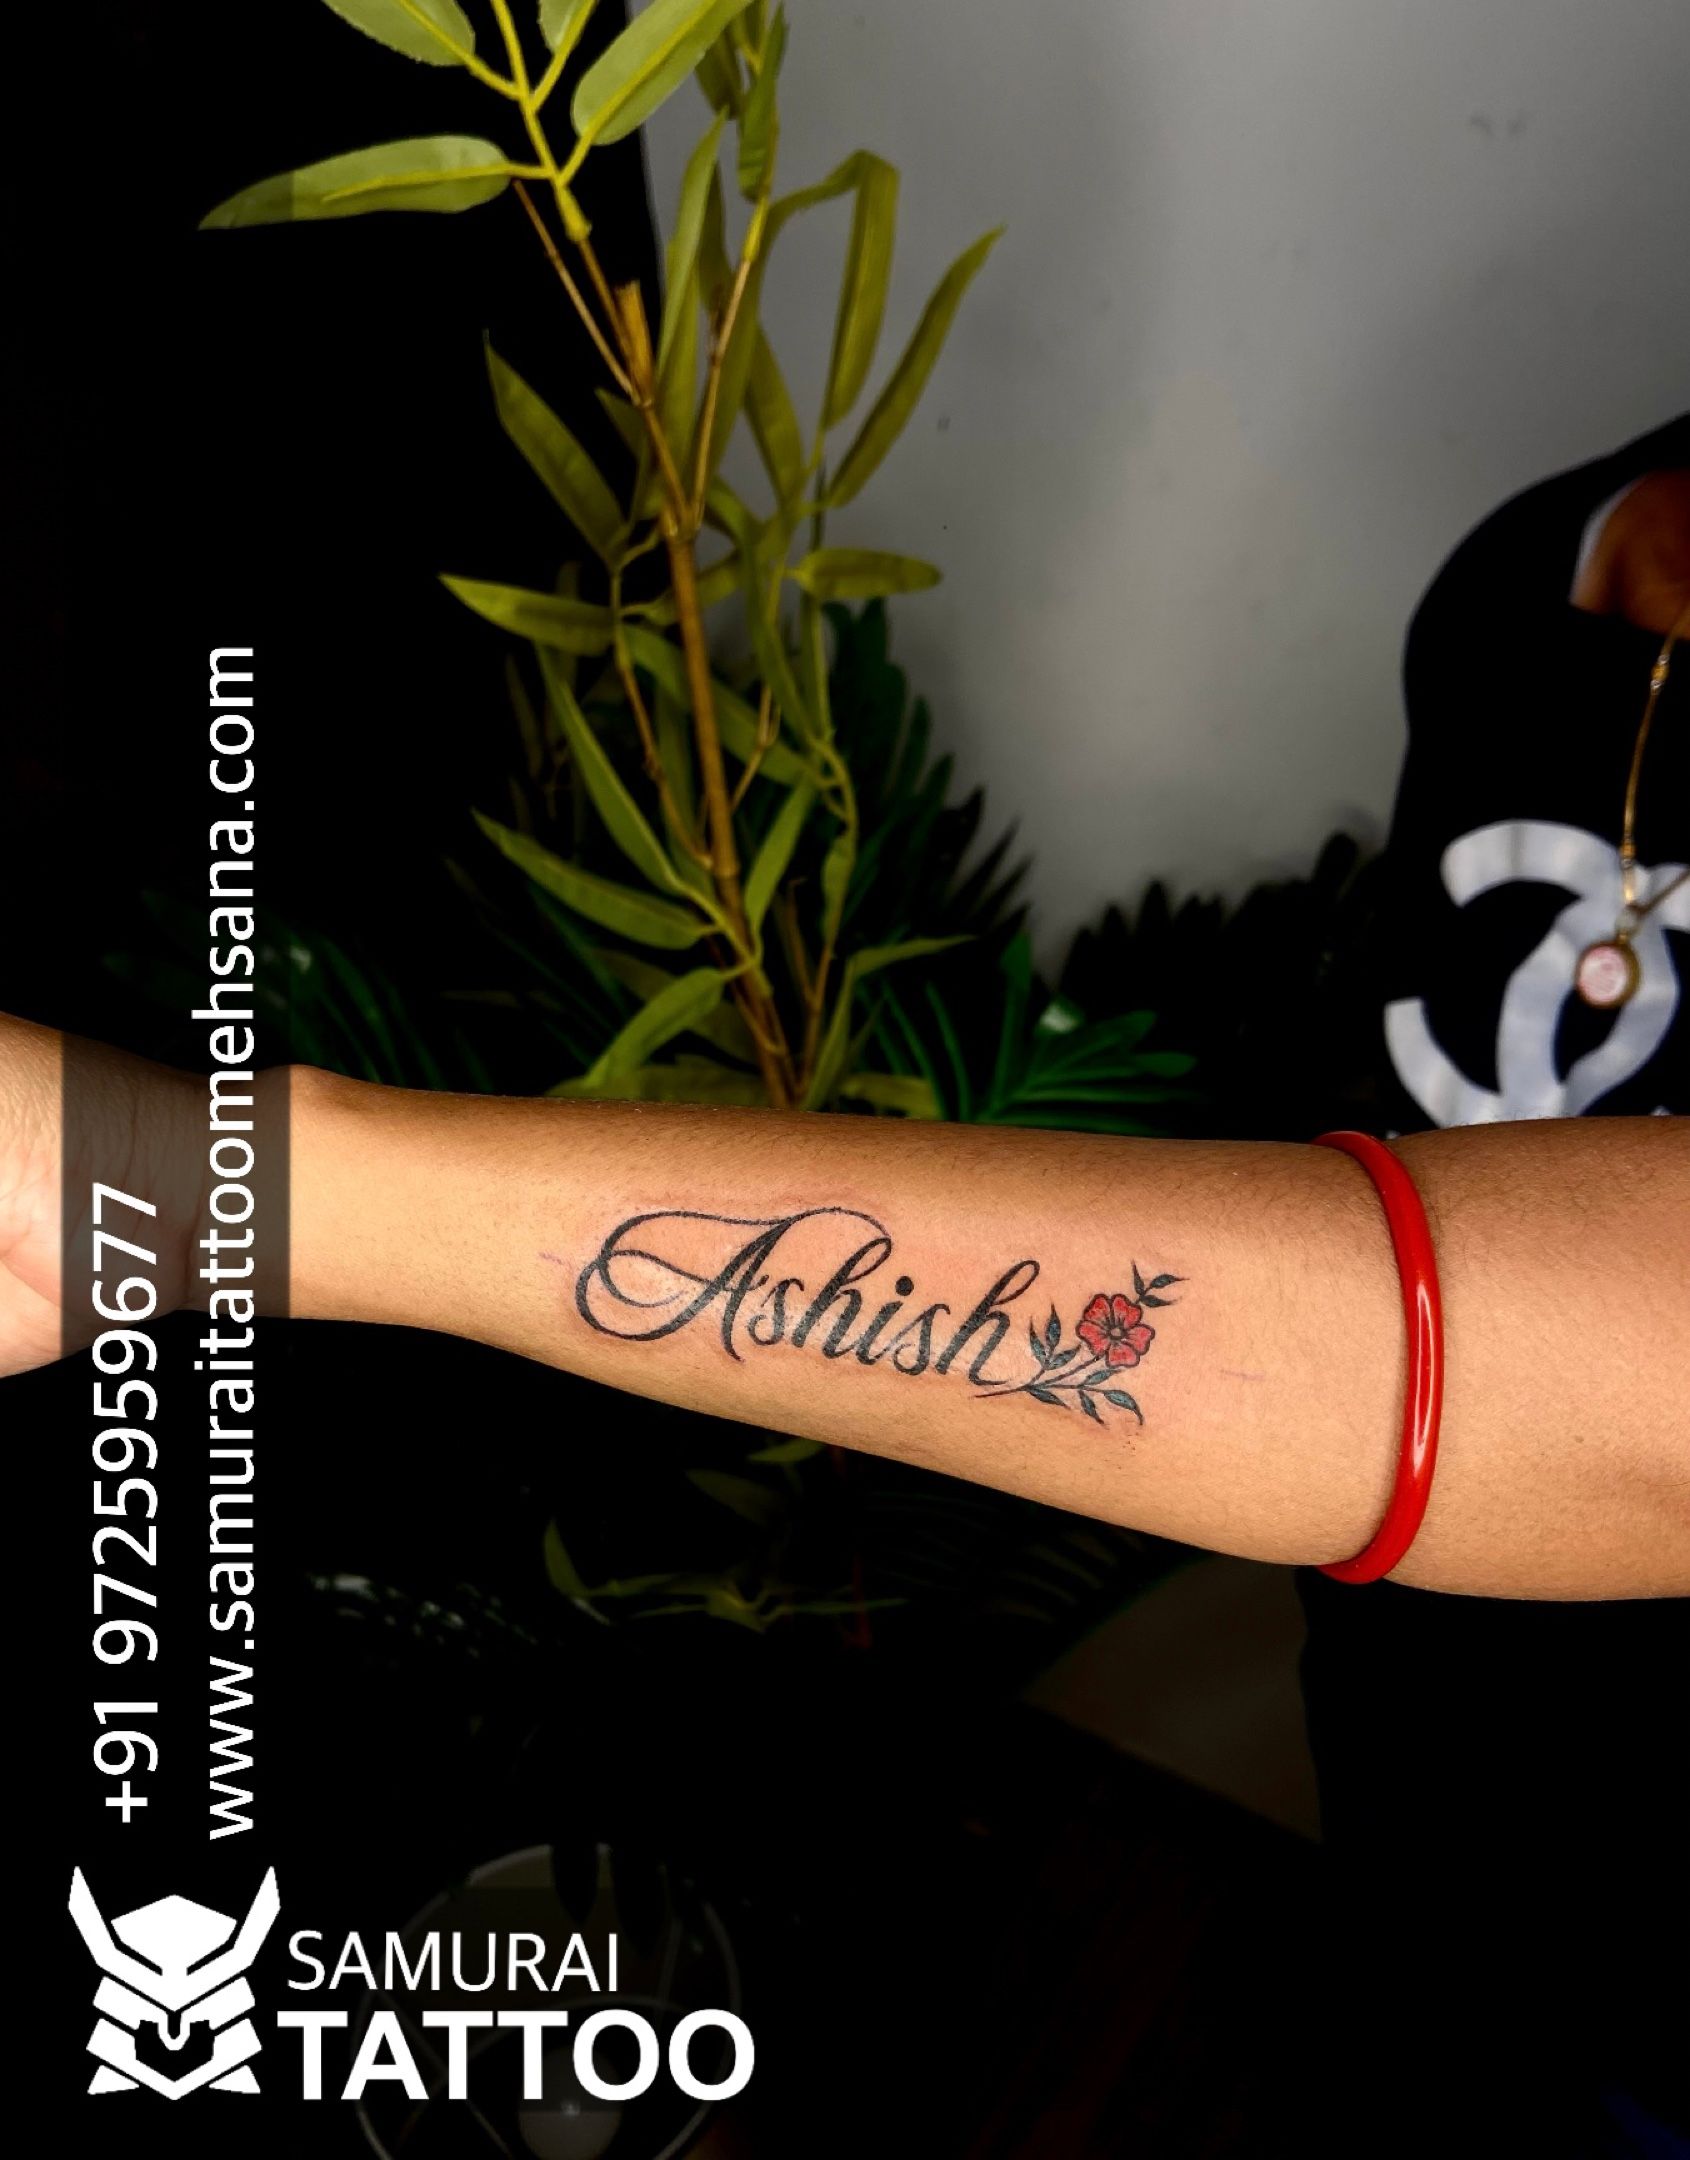 Sandeep name tattoo all types permanentl tattoo newstyletattoosalon  hoshiarpur tattooideas tattoosleeve tattoostyle 3dtattoo godtattoo   By Aish Royal SalonAcademyHoshiarpur  Facebook